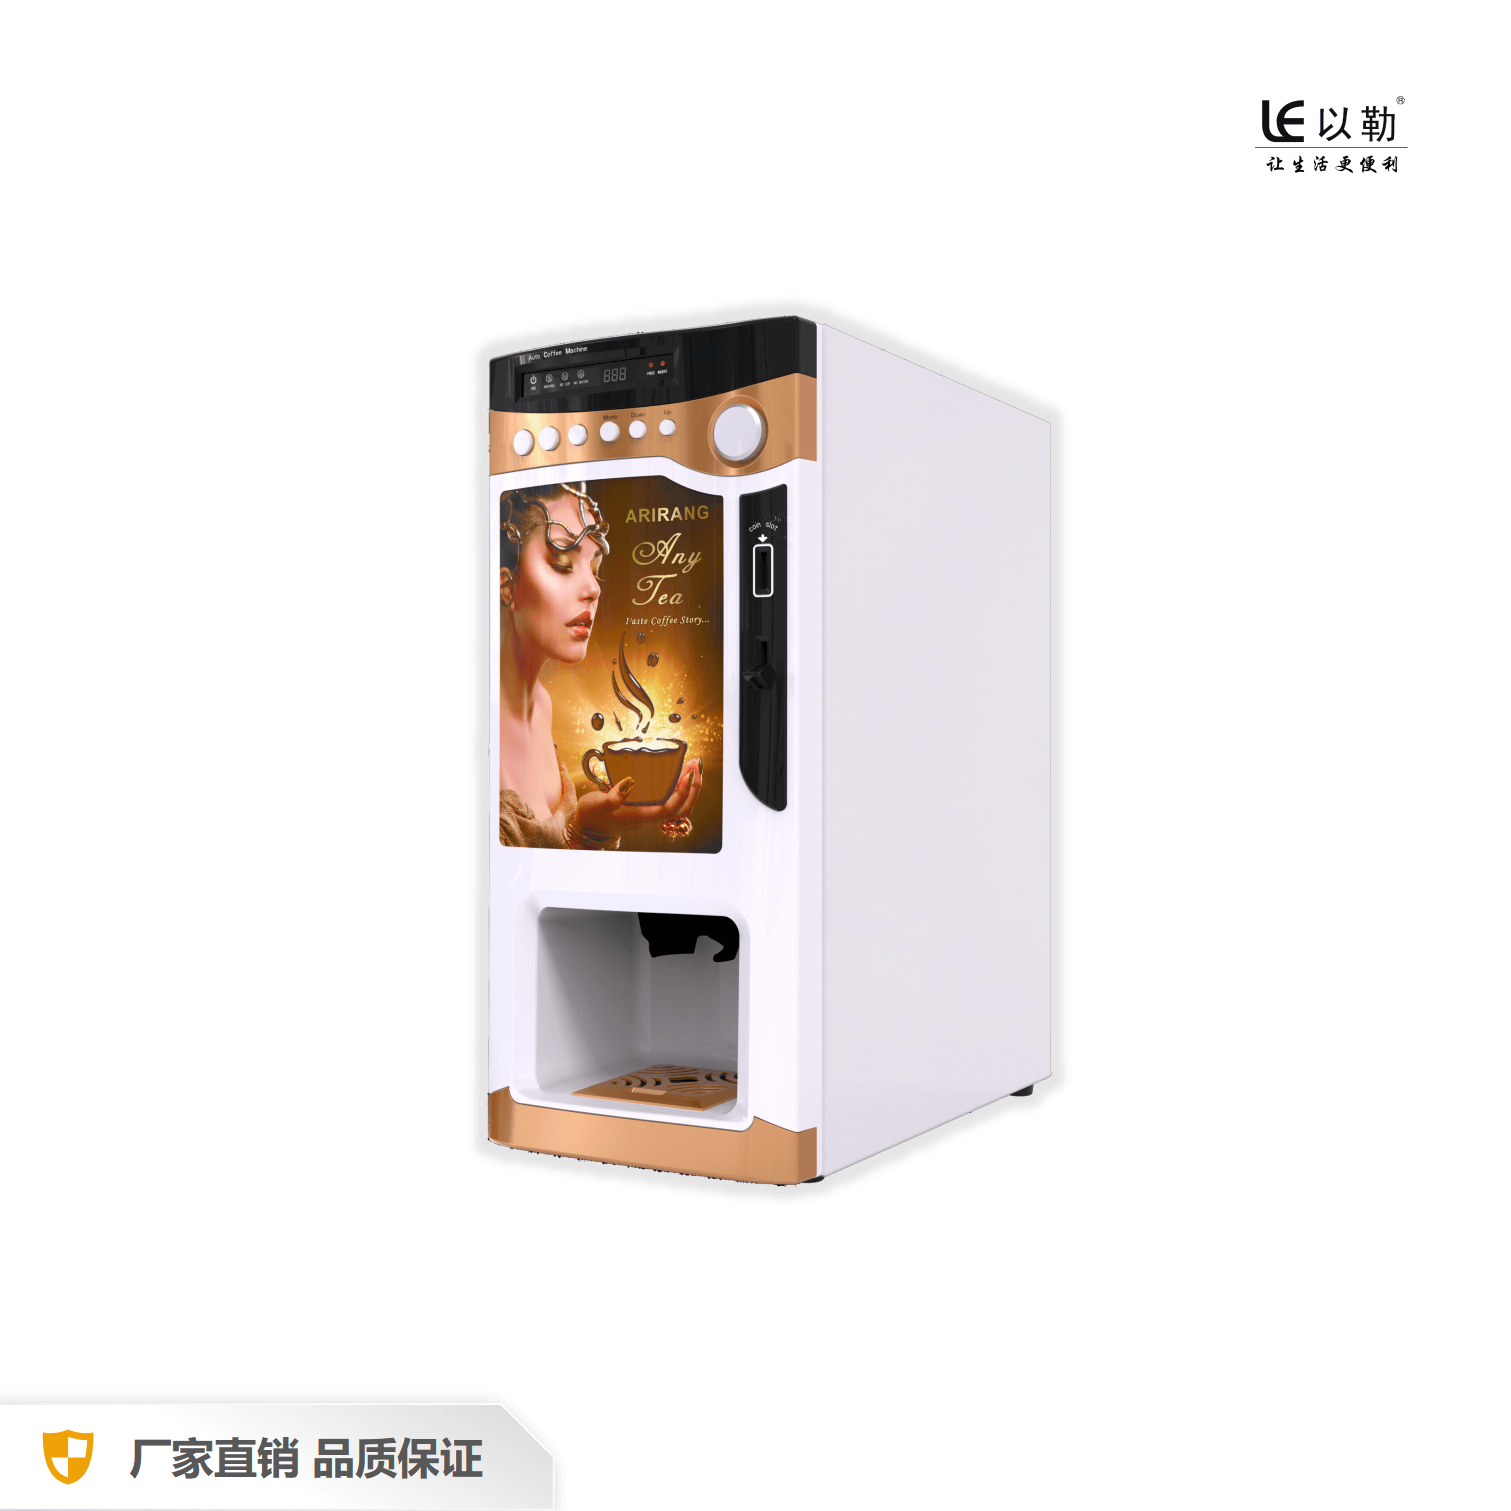 Convenient Outdoor Instant Coffee Vending Machine